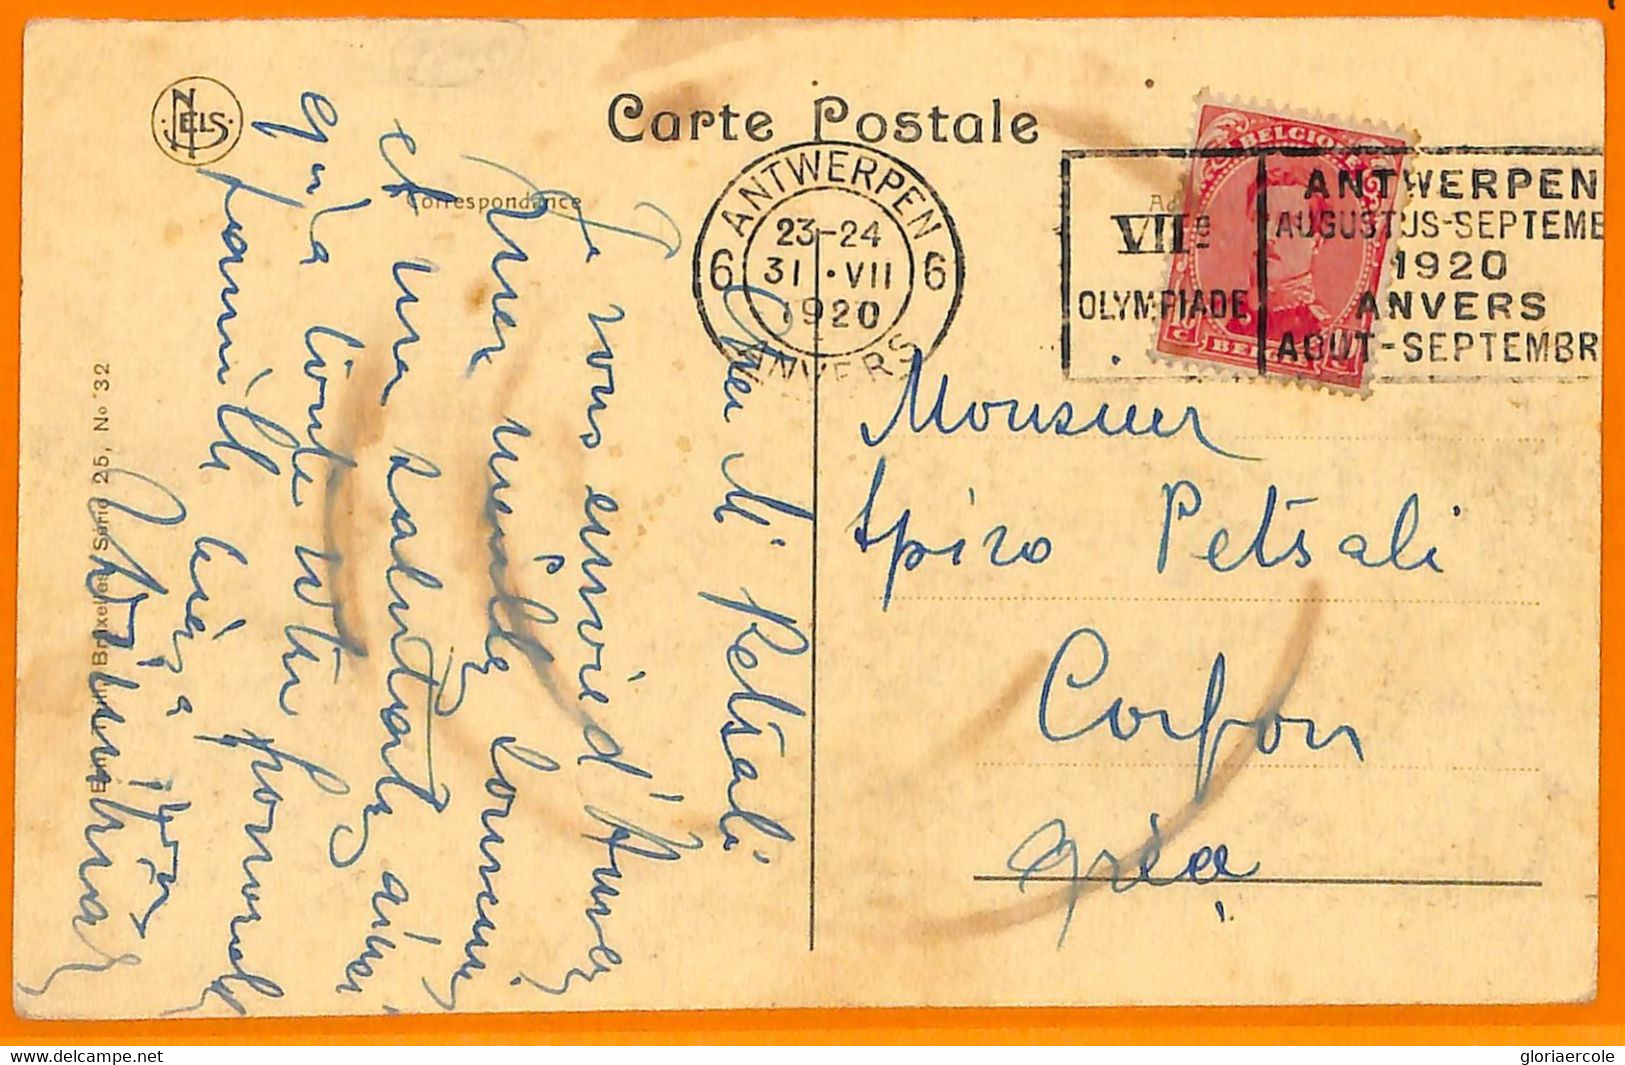 Aa2943 - BELGIUM - POSTAL HISTORY - 1920 Olympic Postmark On POSTCARD To GREECE - Sommer 1920: Antwerpen